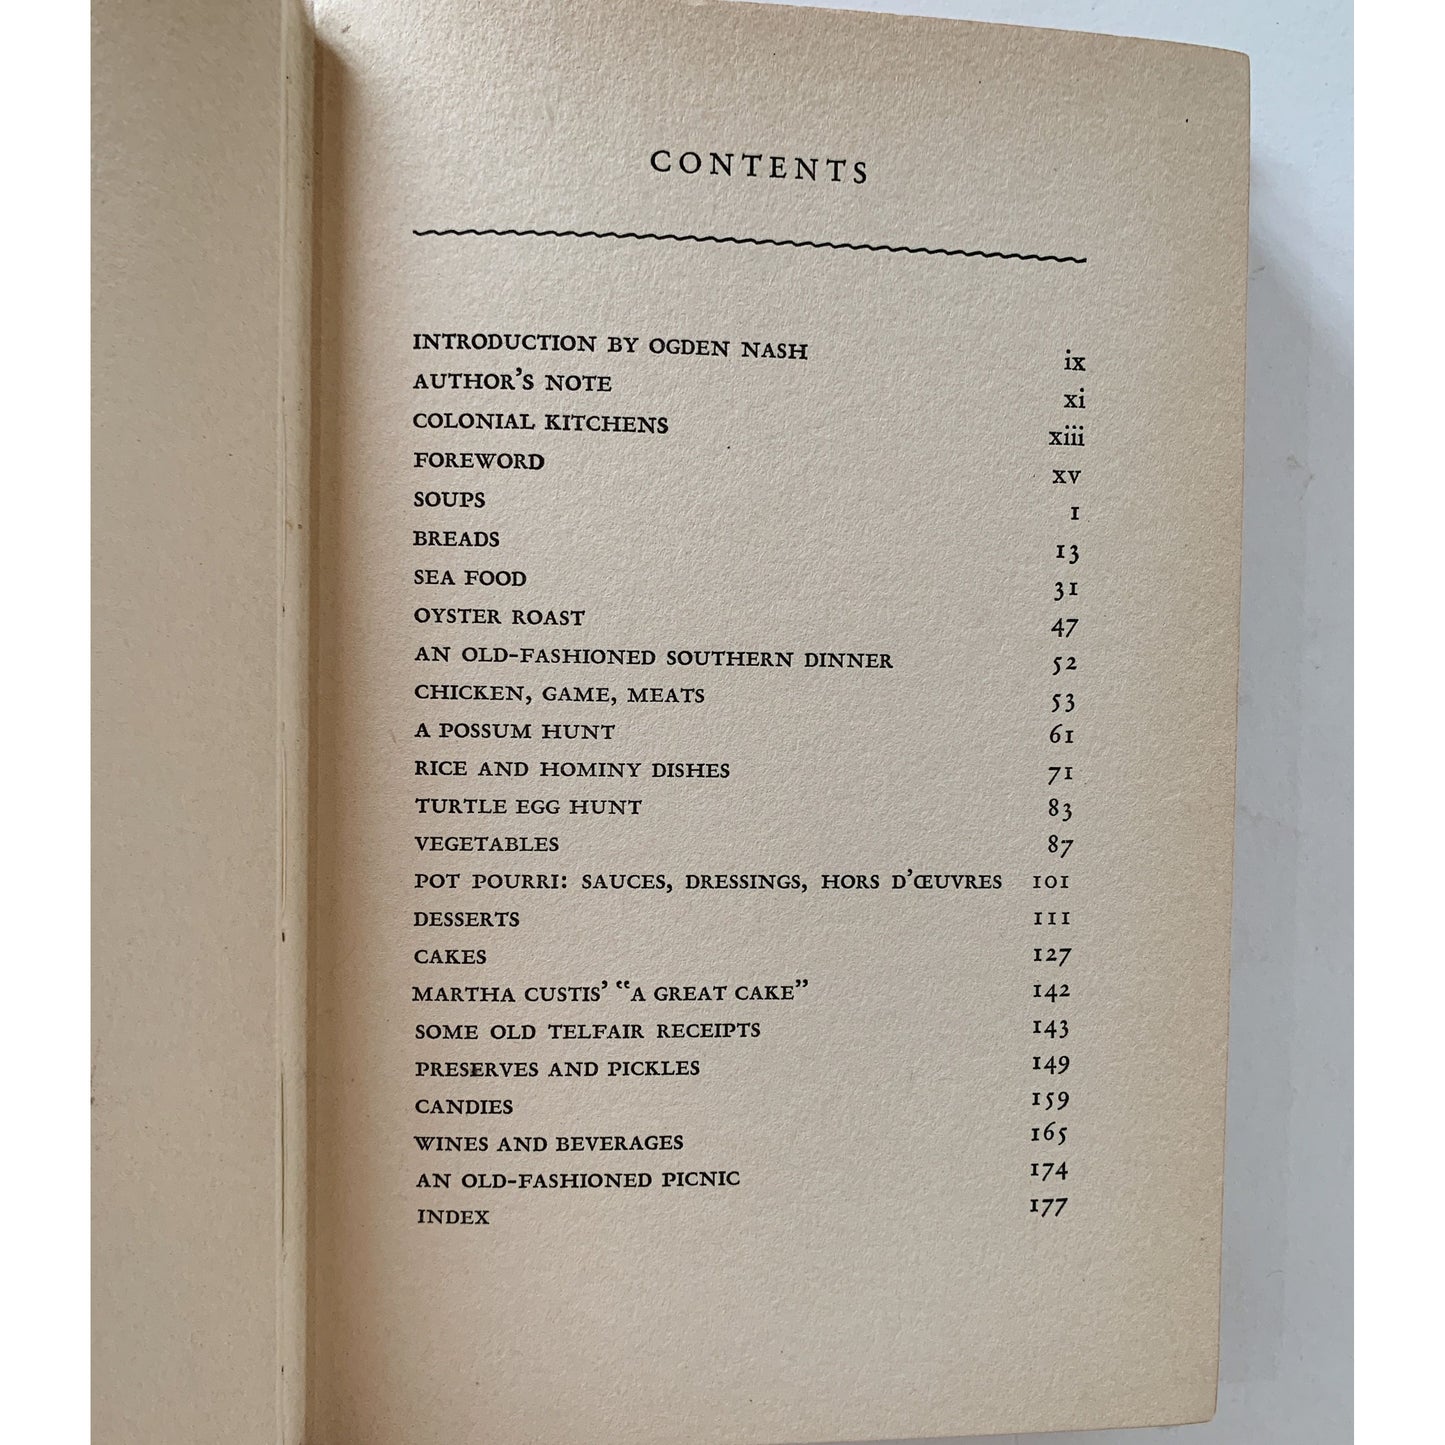 The Savannah Cook Book, First Edition, 1933